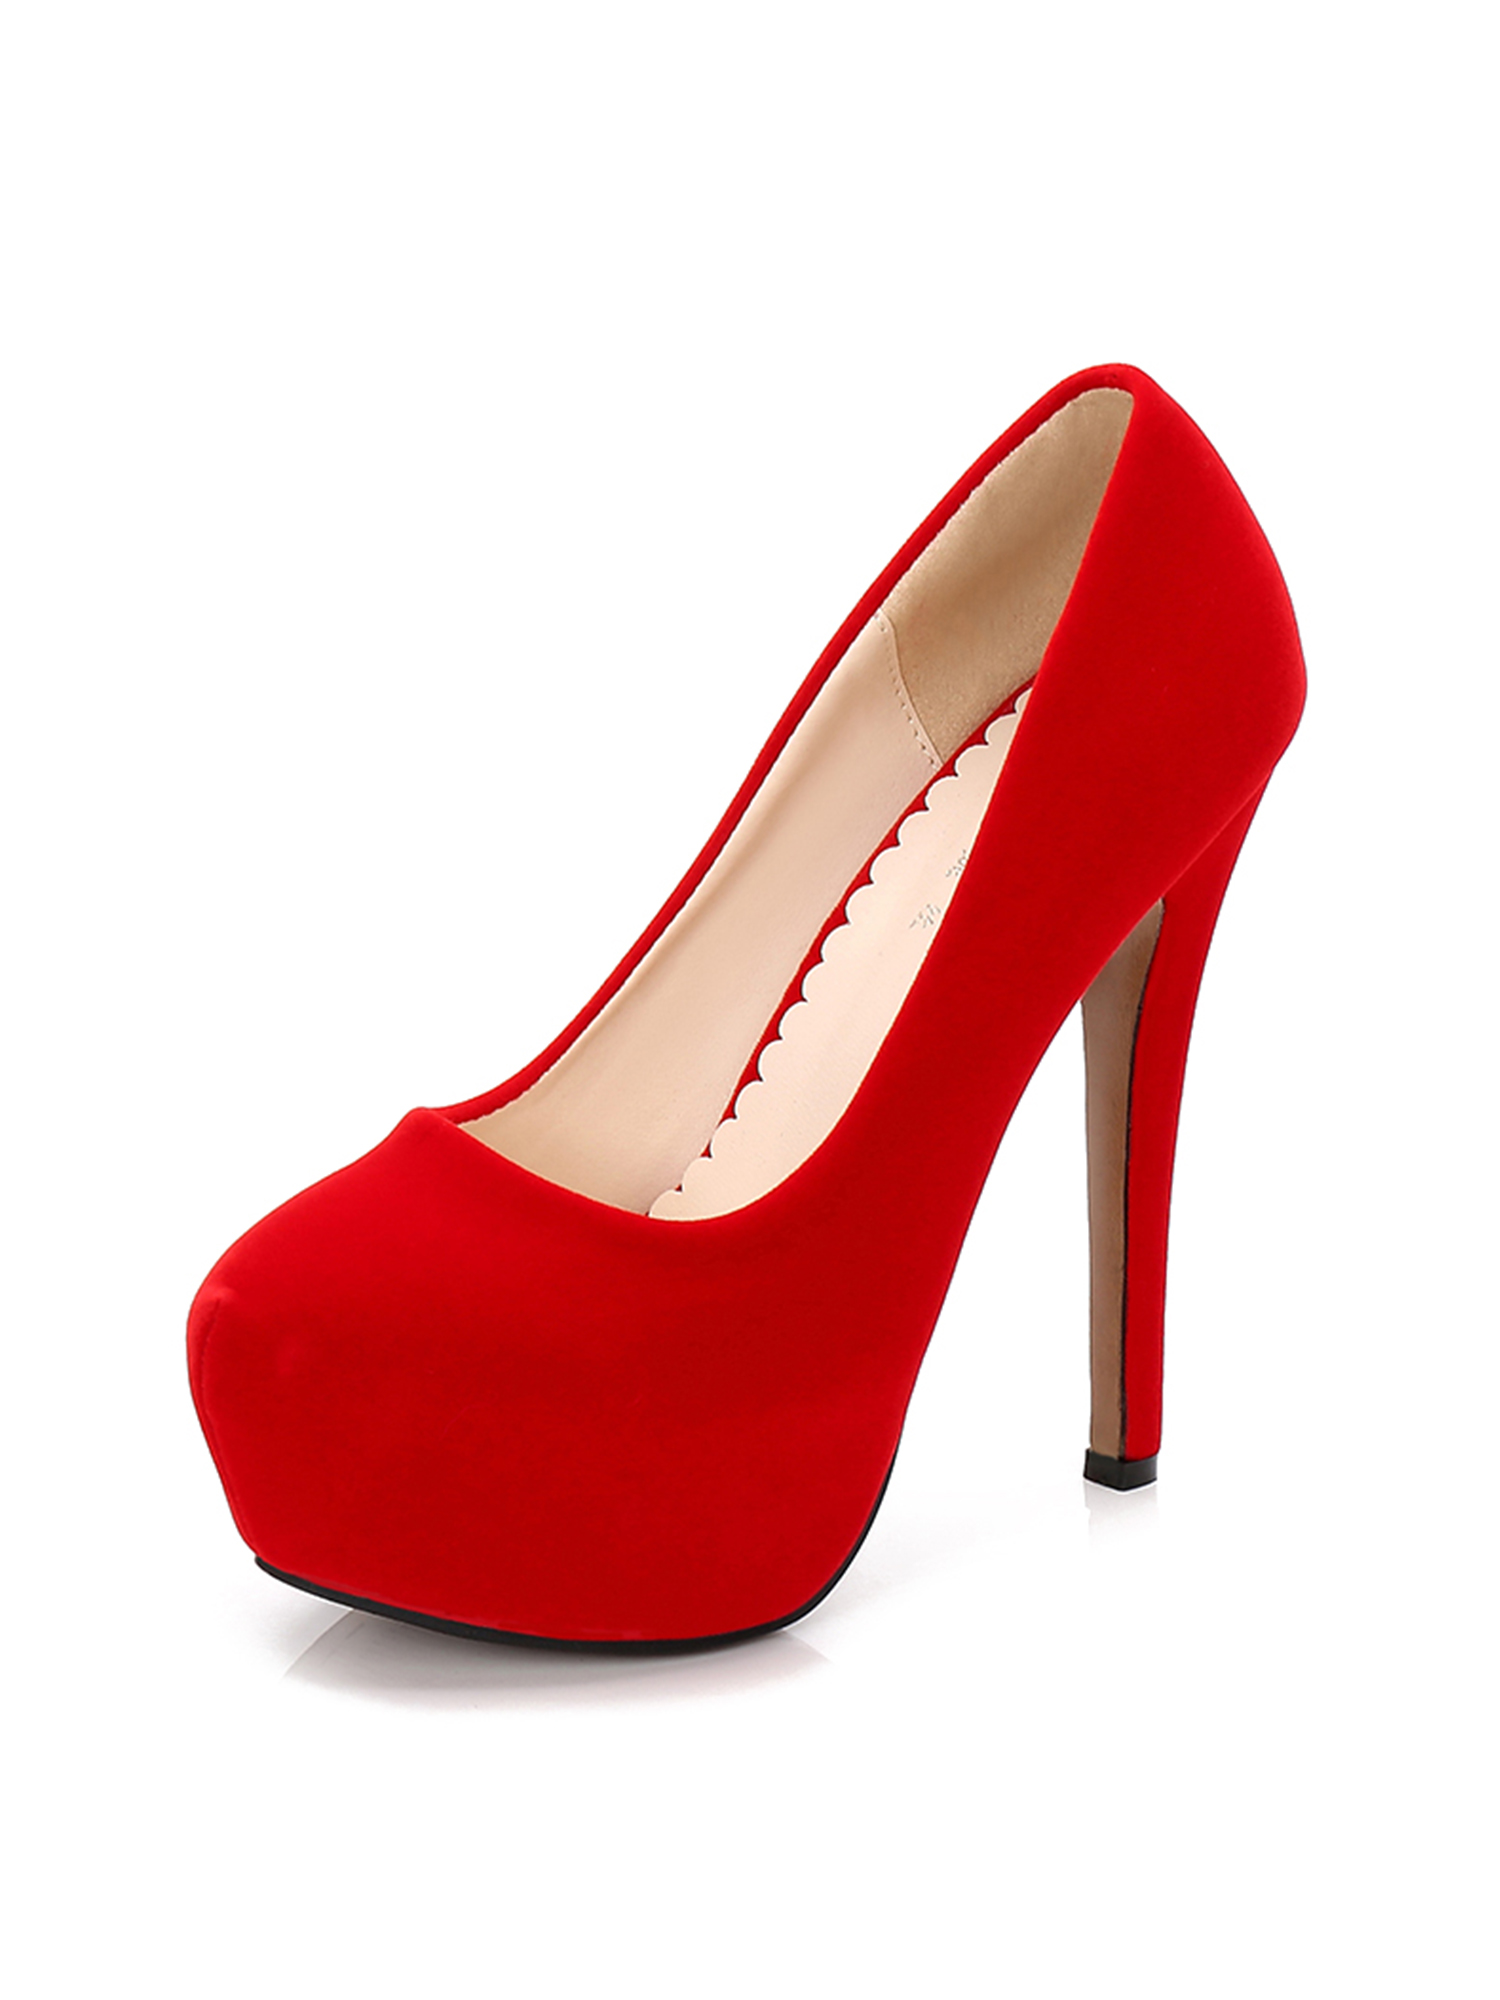 Daeful Women Lightweight High Heel Platform Pump Wedding Stiletto Heels Walking Fashion Dress Shoes Red (14cm) 11 - image 1 of 9